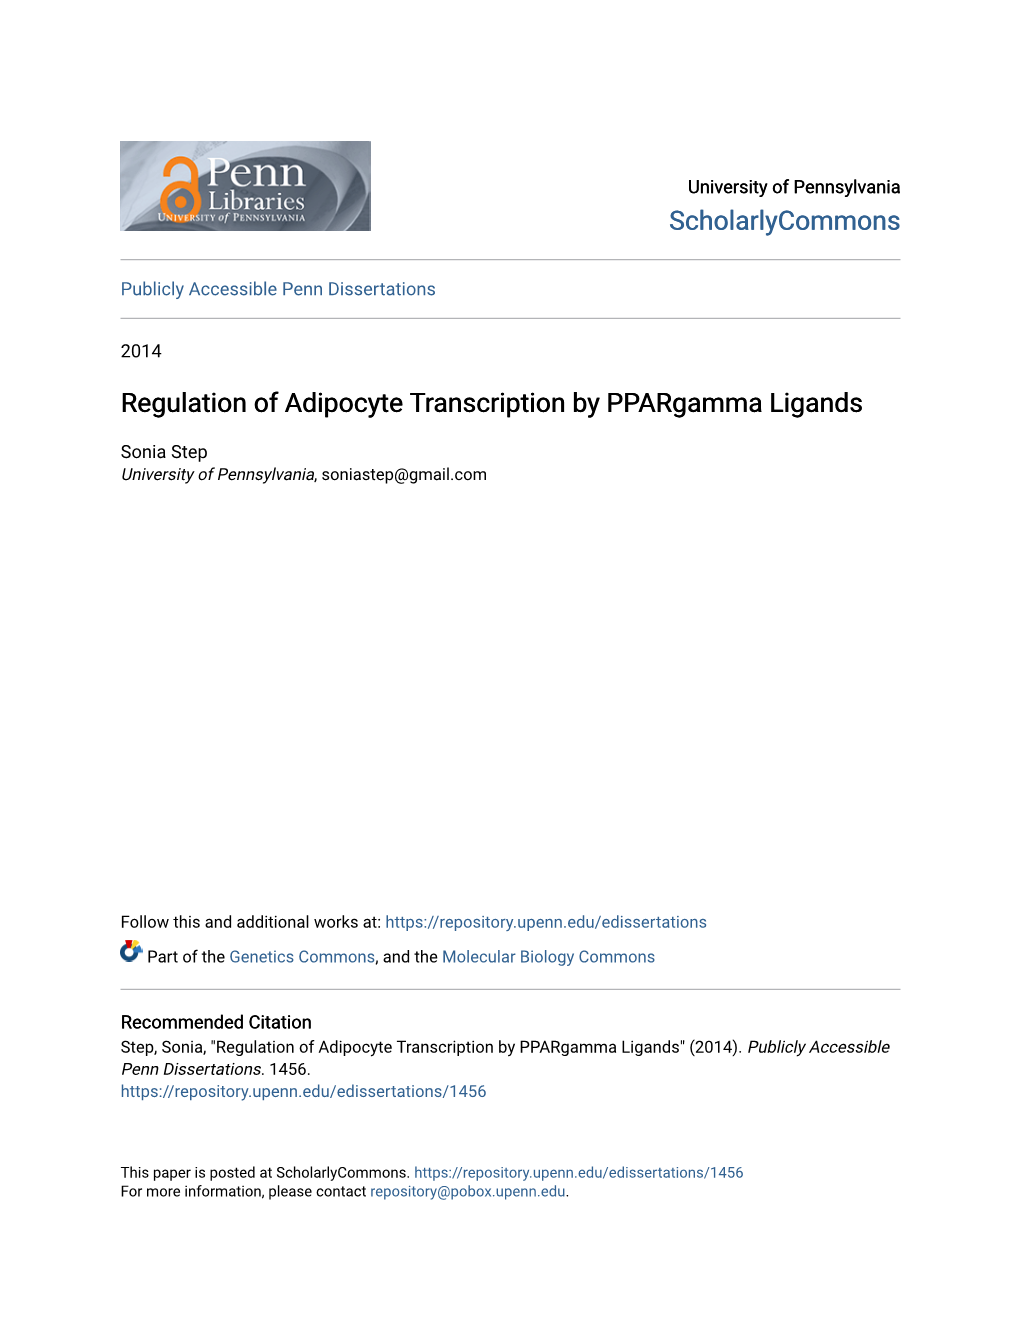 Regulation of Adipocyte Transcription by Ppargamma Ligands